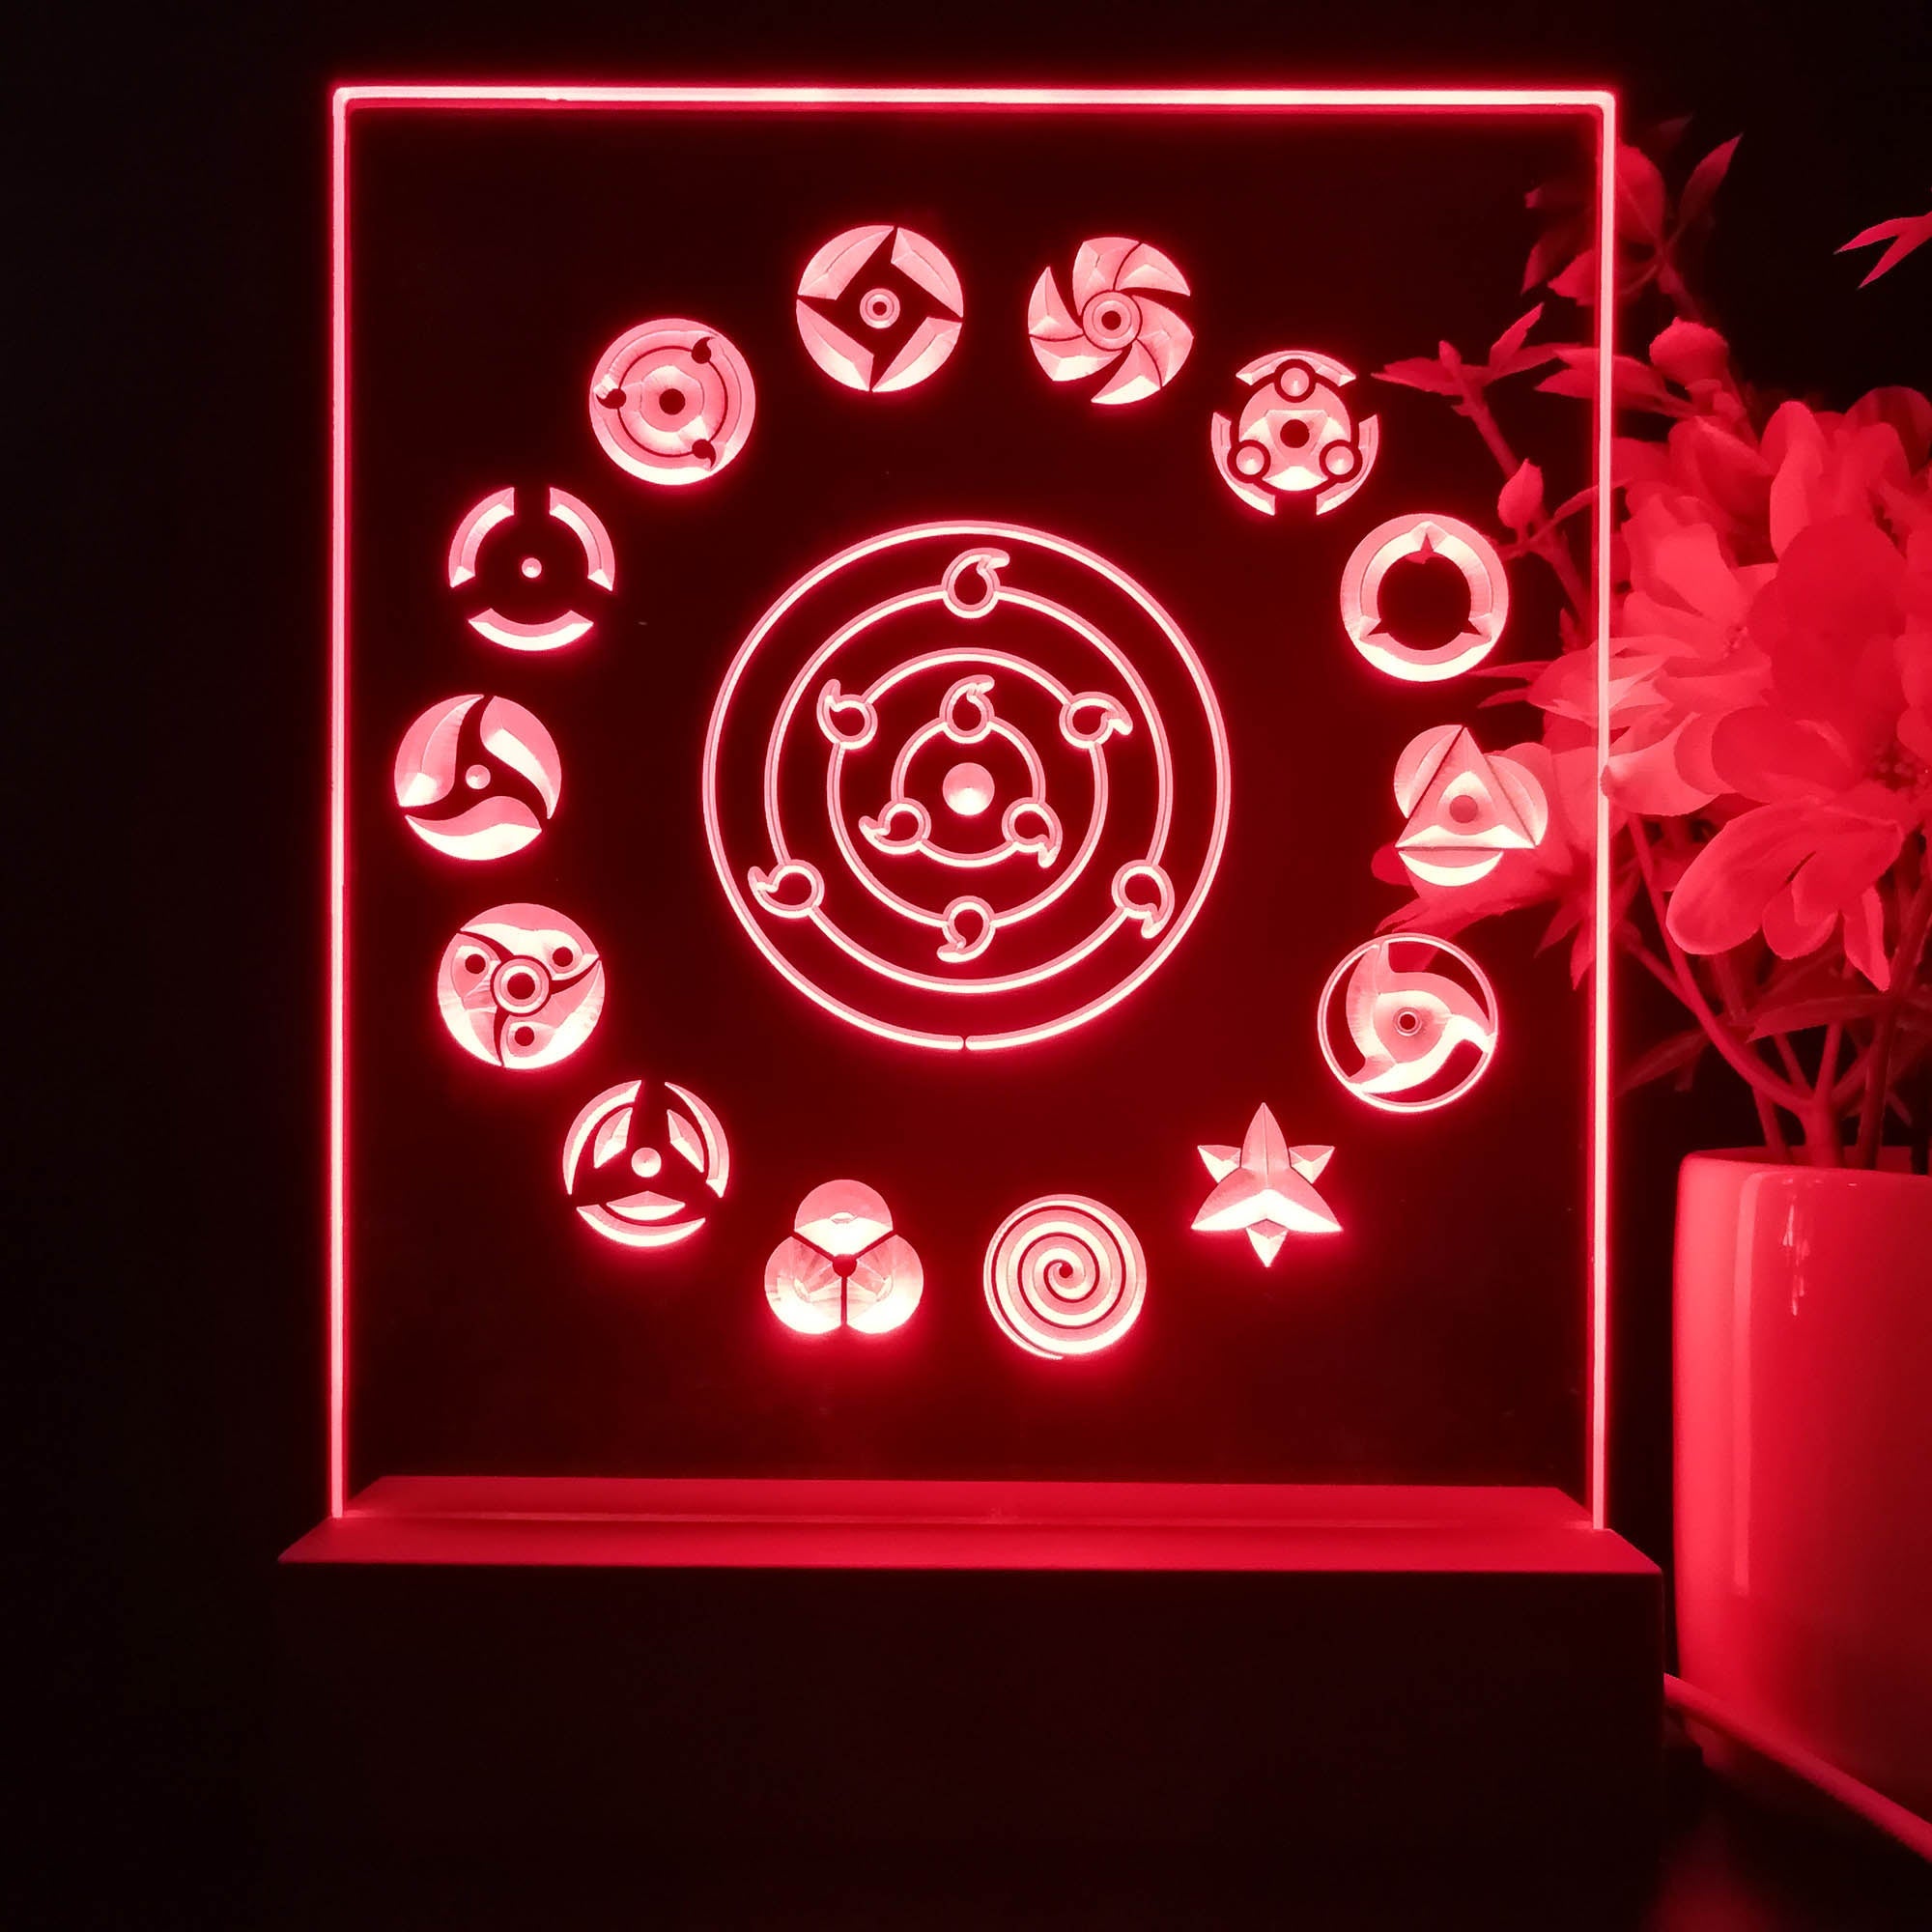 Sharingan Game Room LED Sign Lamp Display